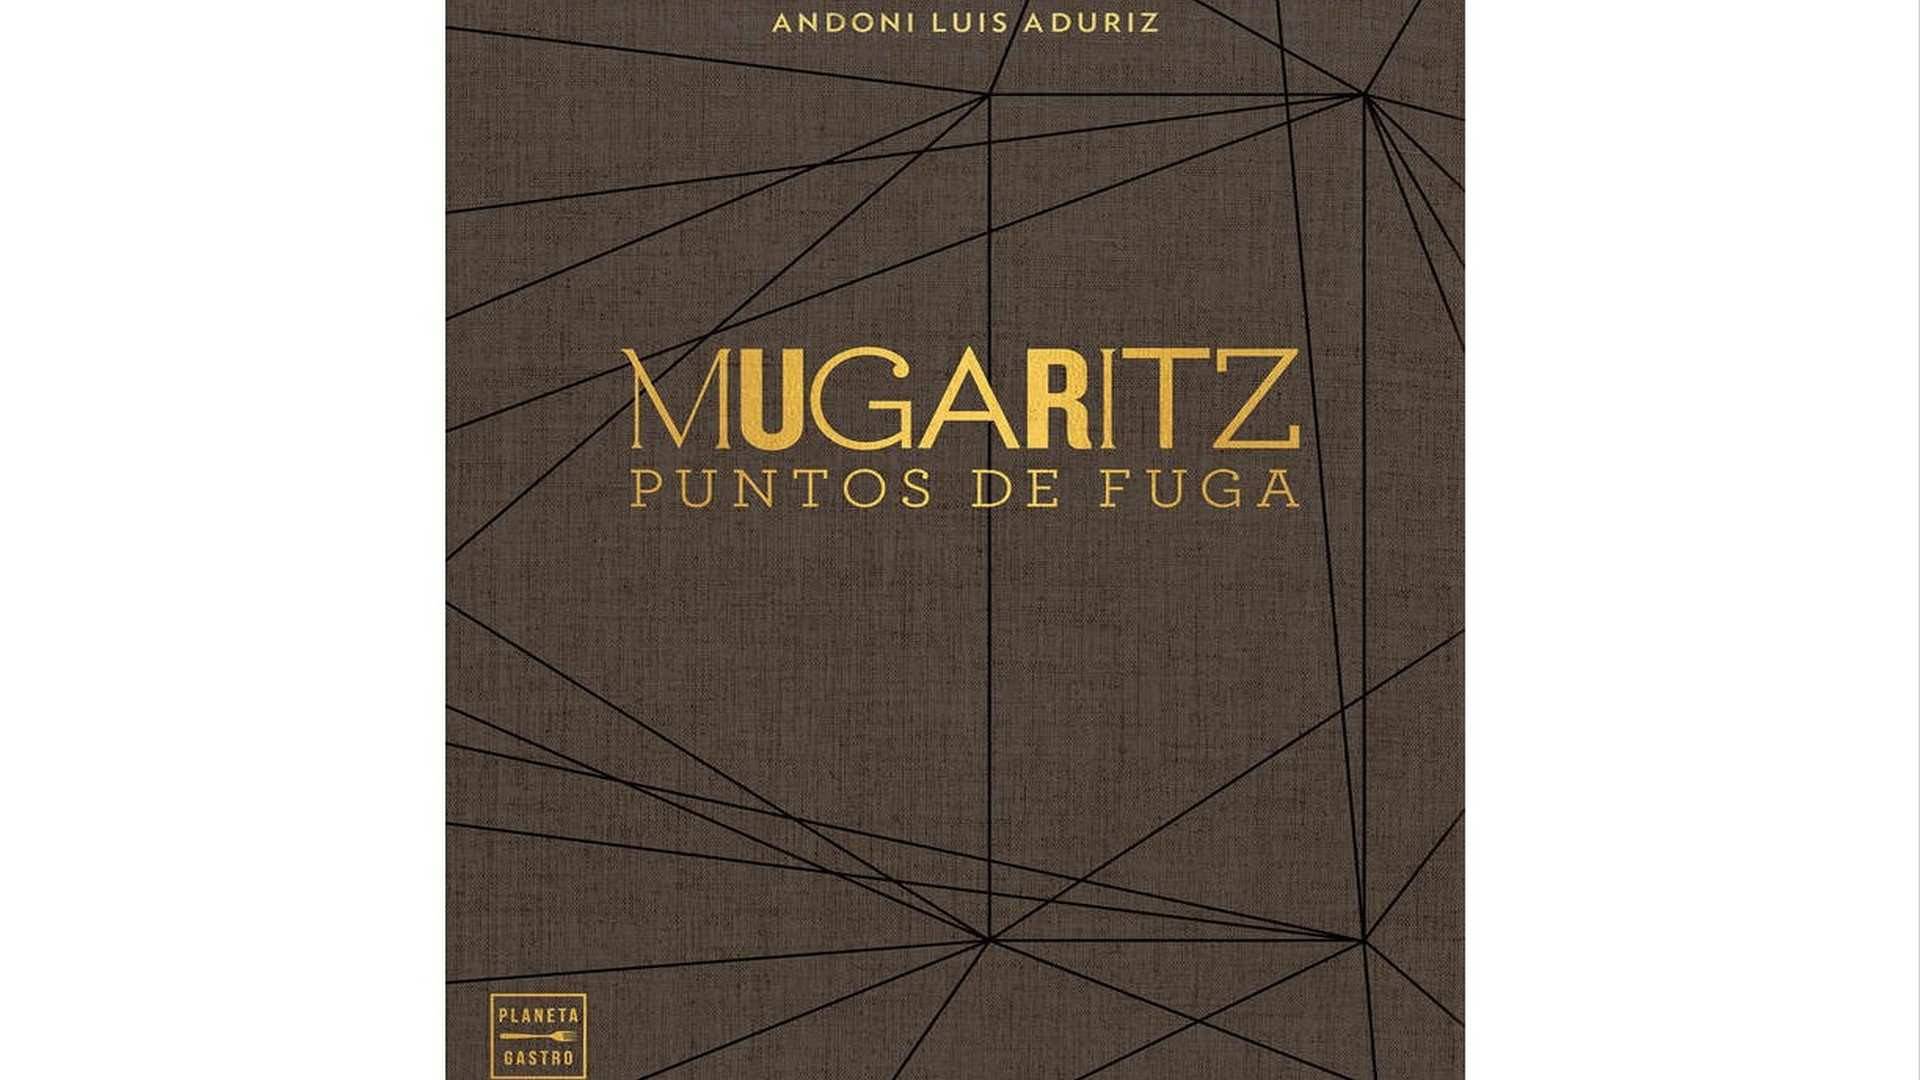 Mugaritz, puntos de fuga